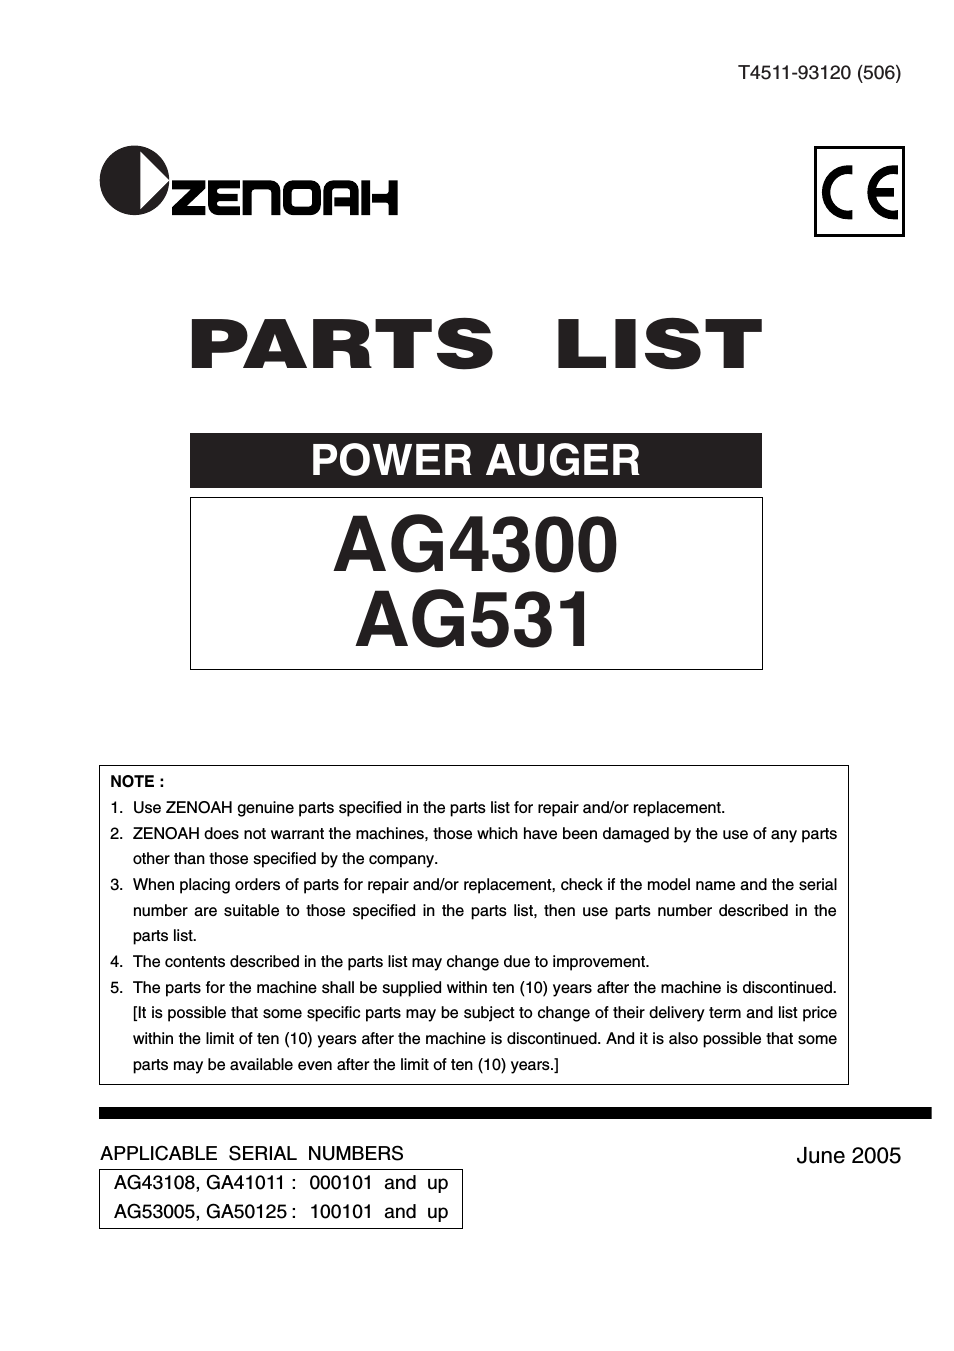 POWER AUGER AG4300